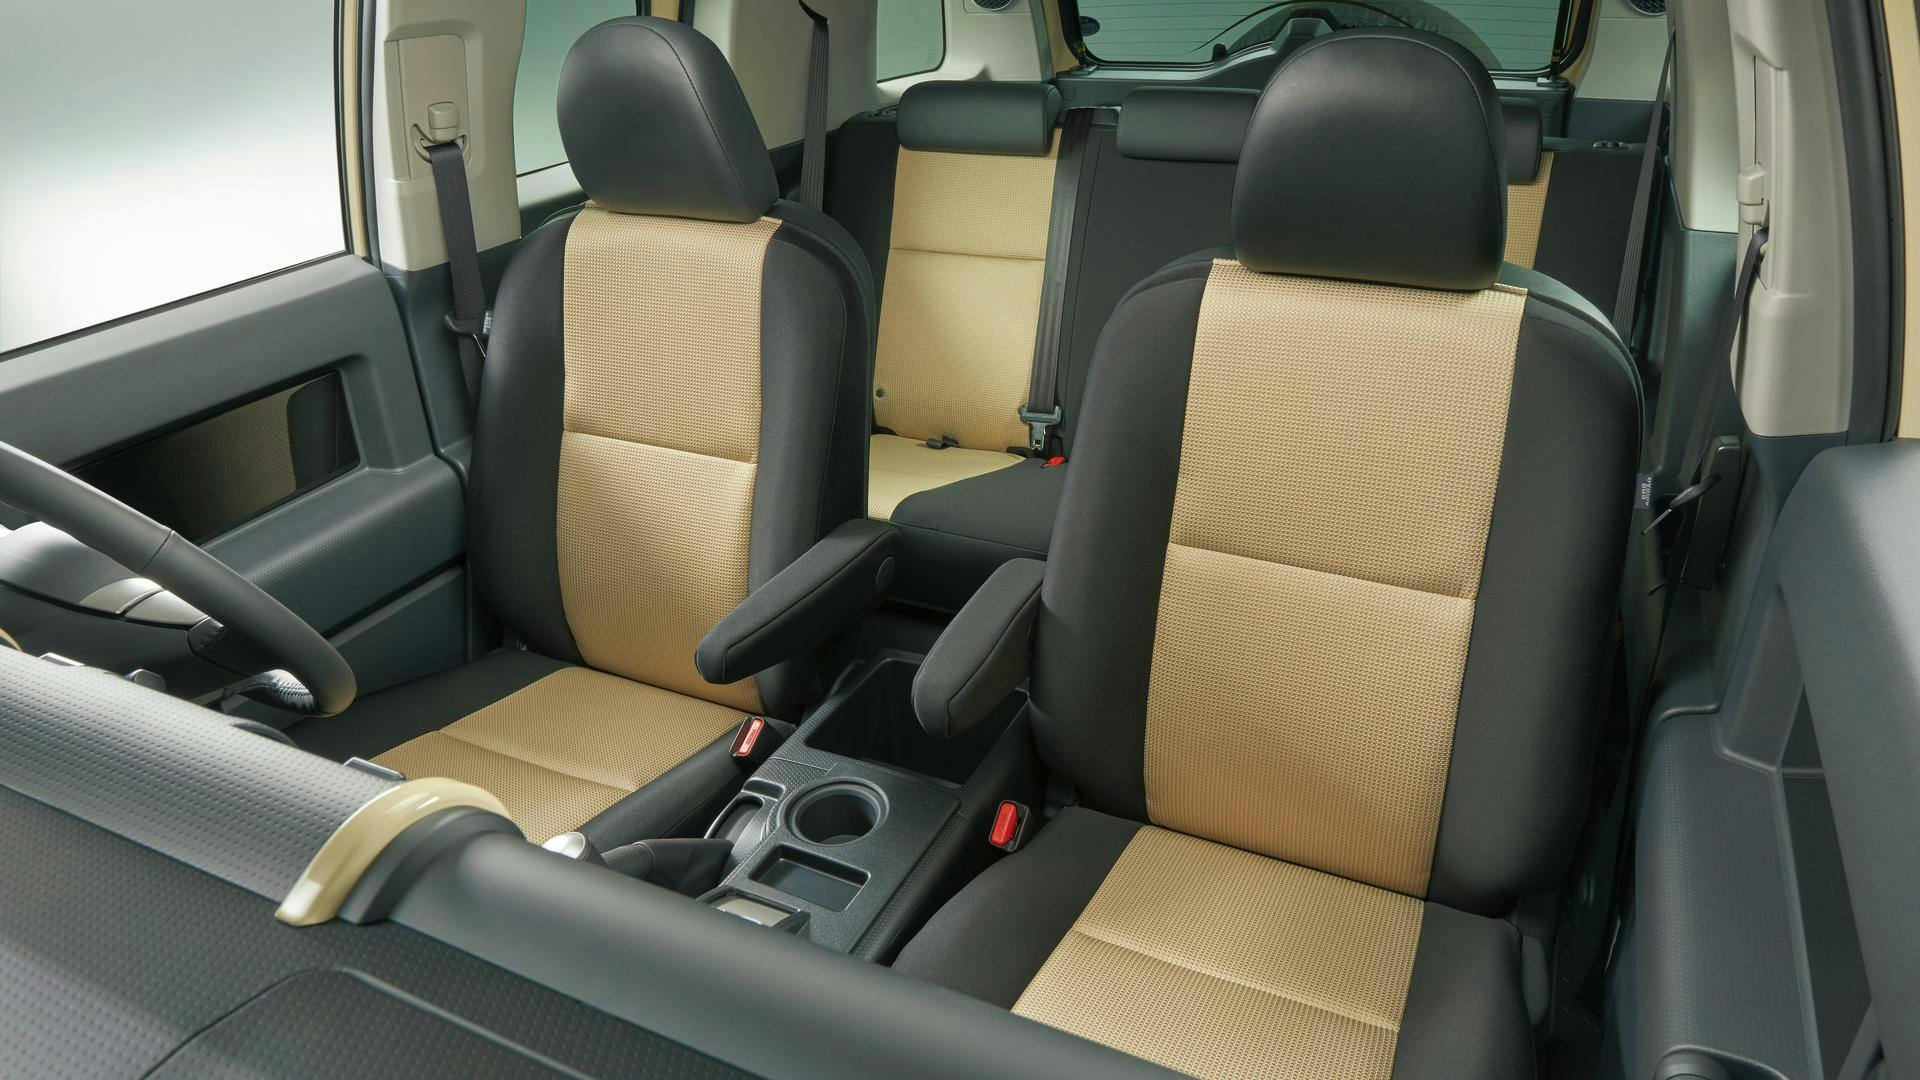 Toyota FJ Cruiser Final Edition interior detail 2